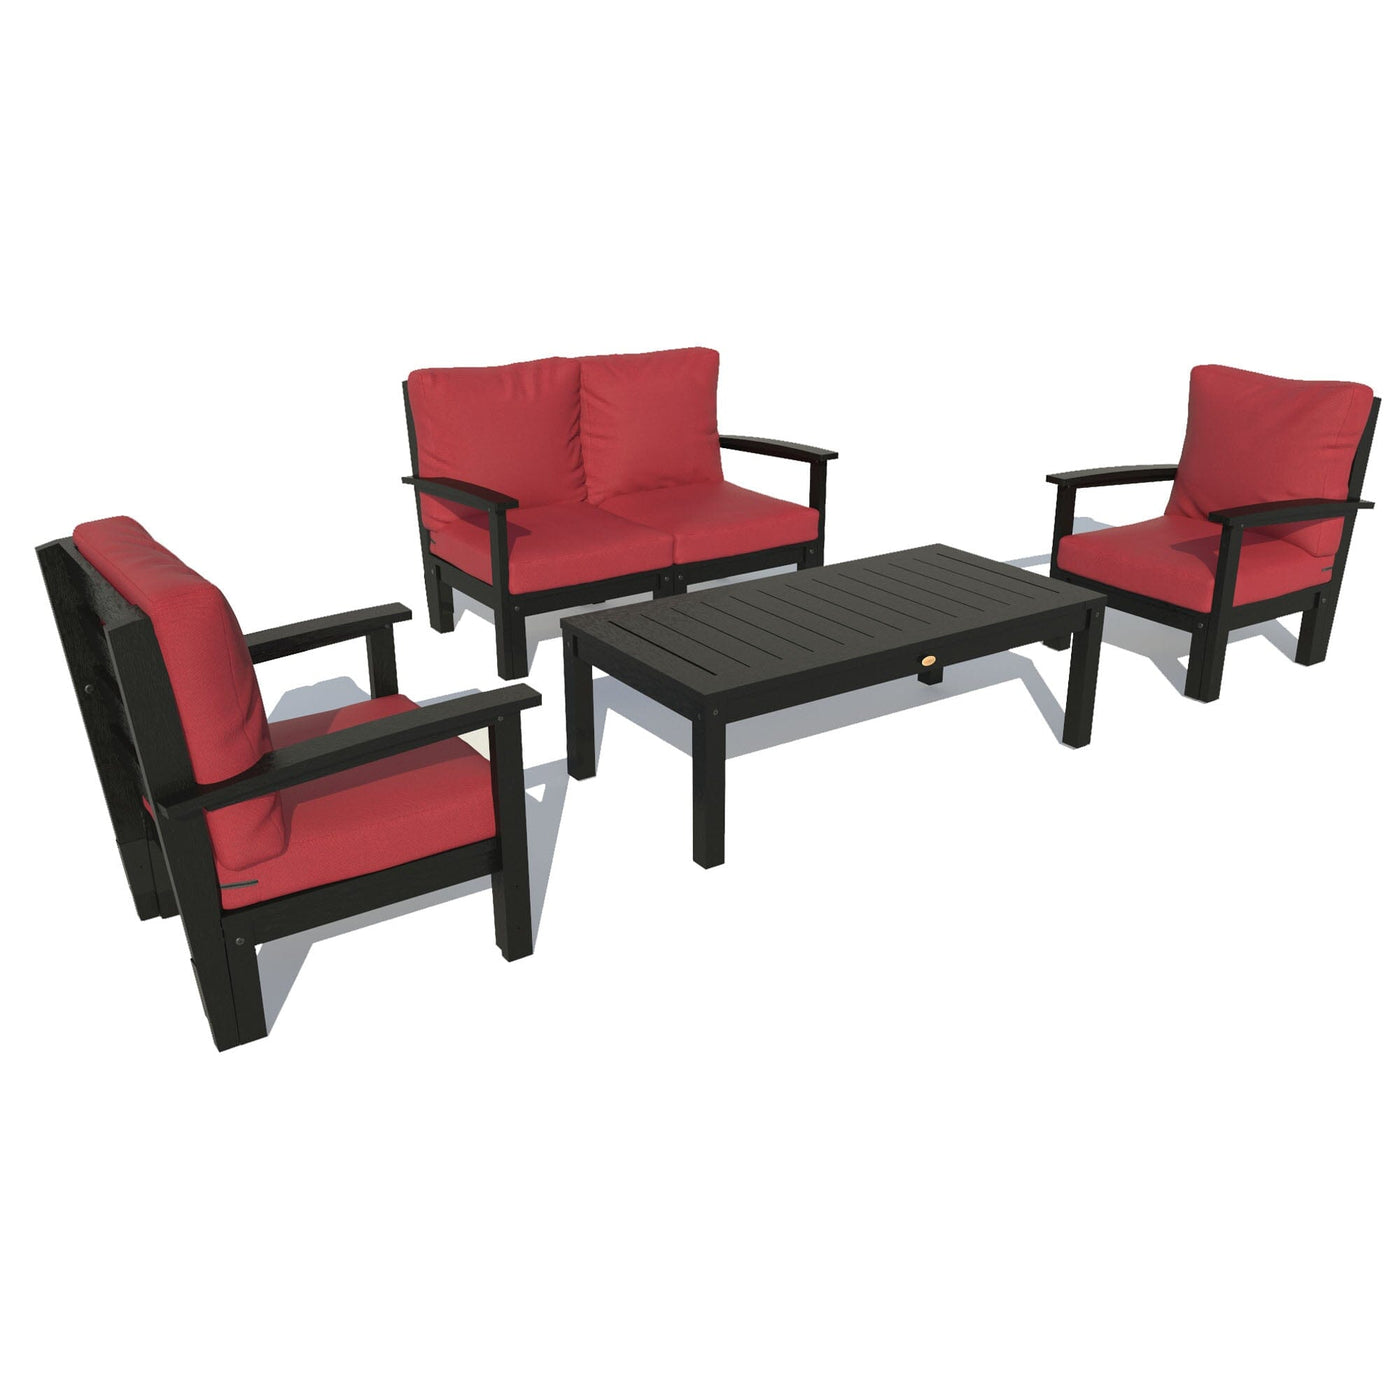 Bespoke Deep Seating: Loveseat, 2 Chair Set, and Conversation Table Deep Seating Highwood USA Firecracker Red Black 